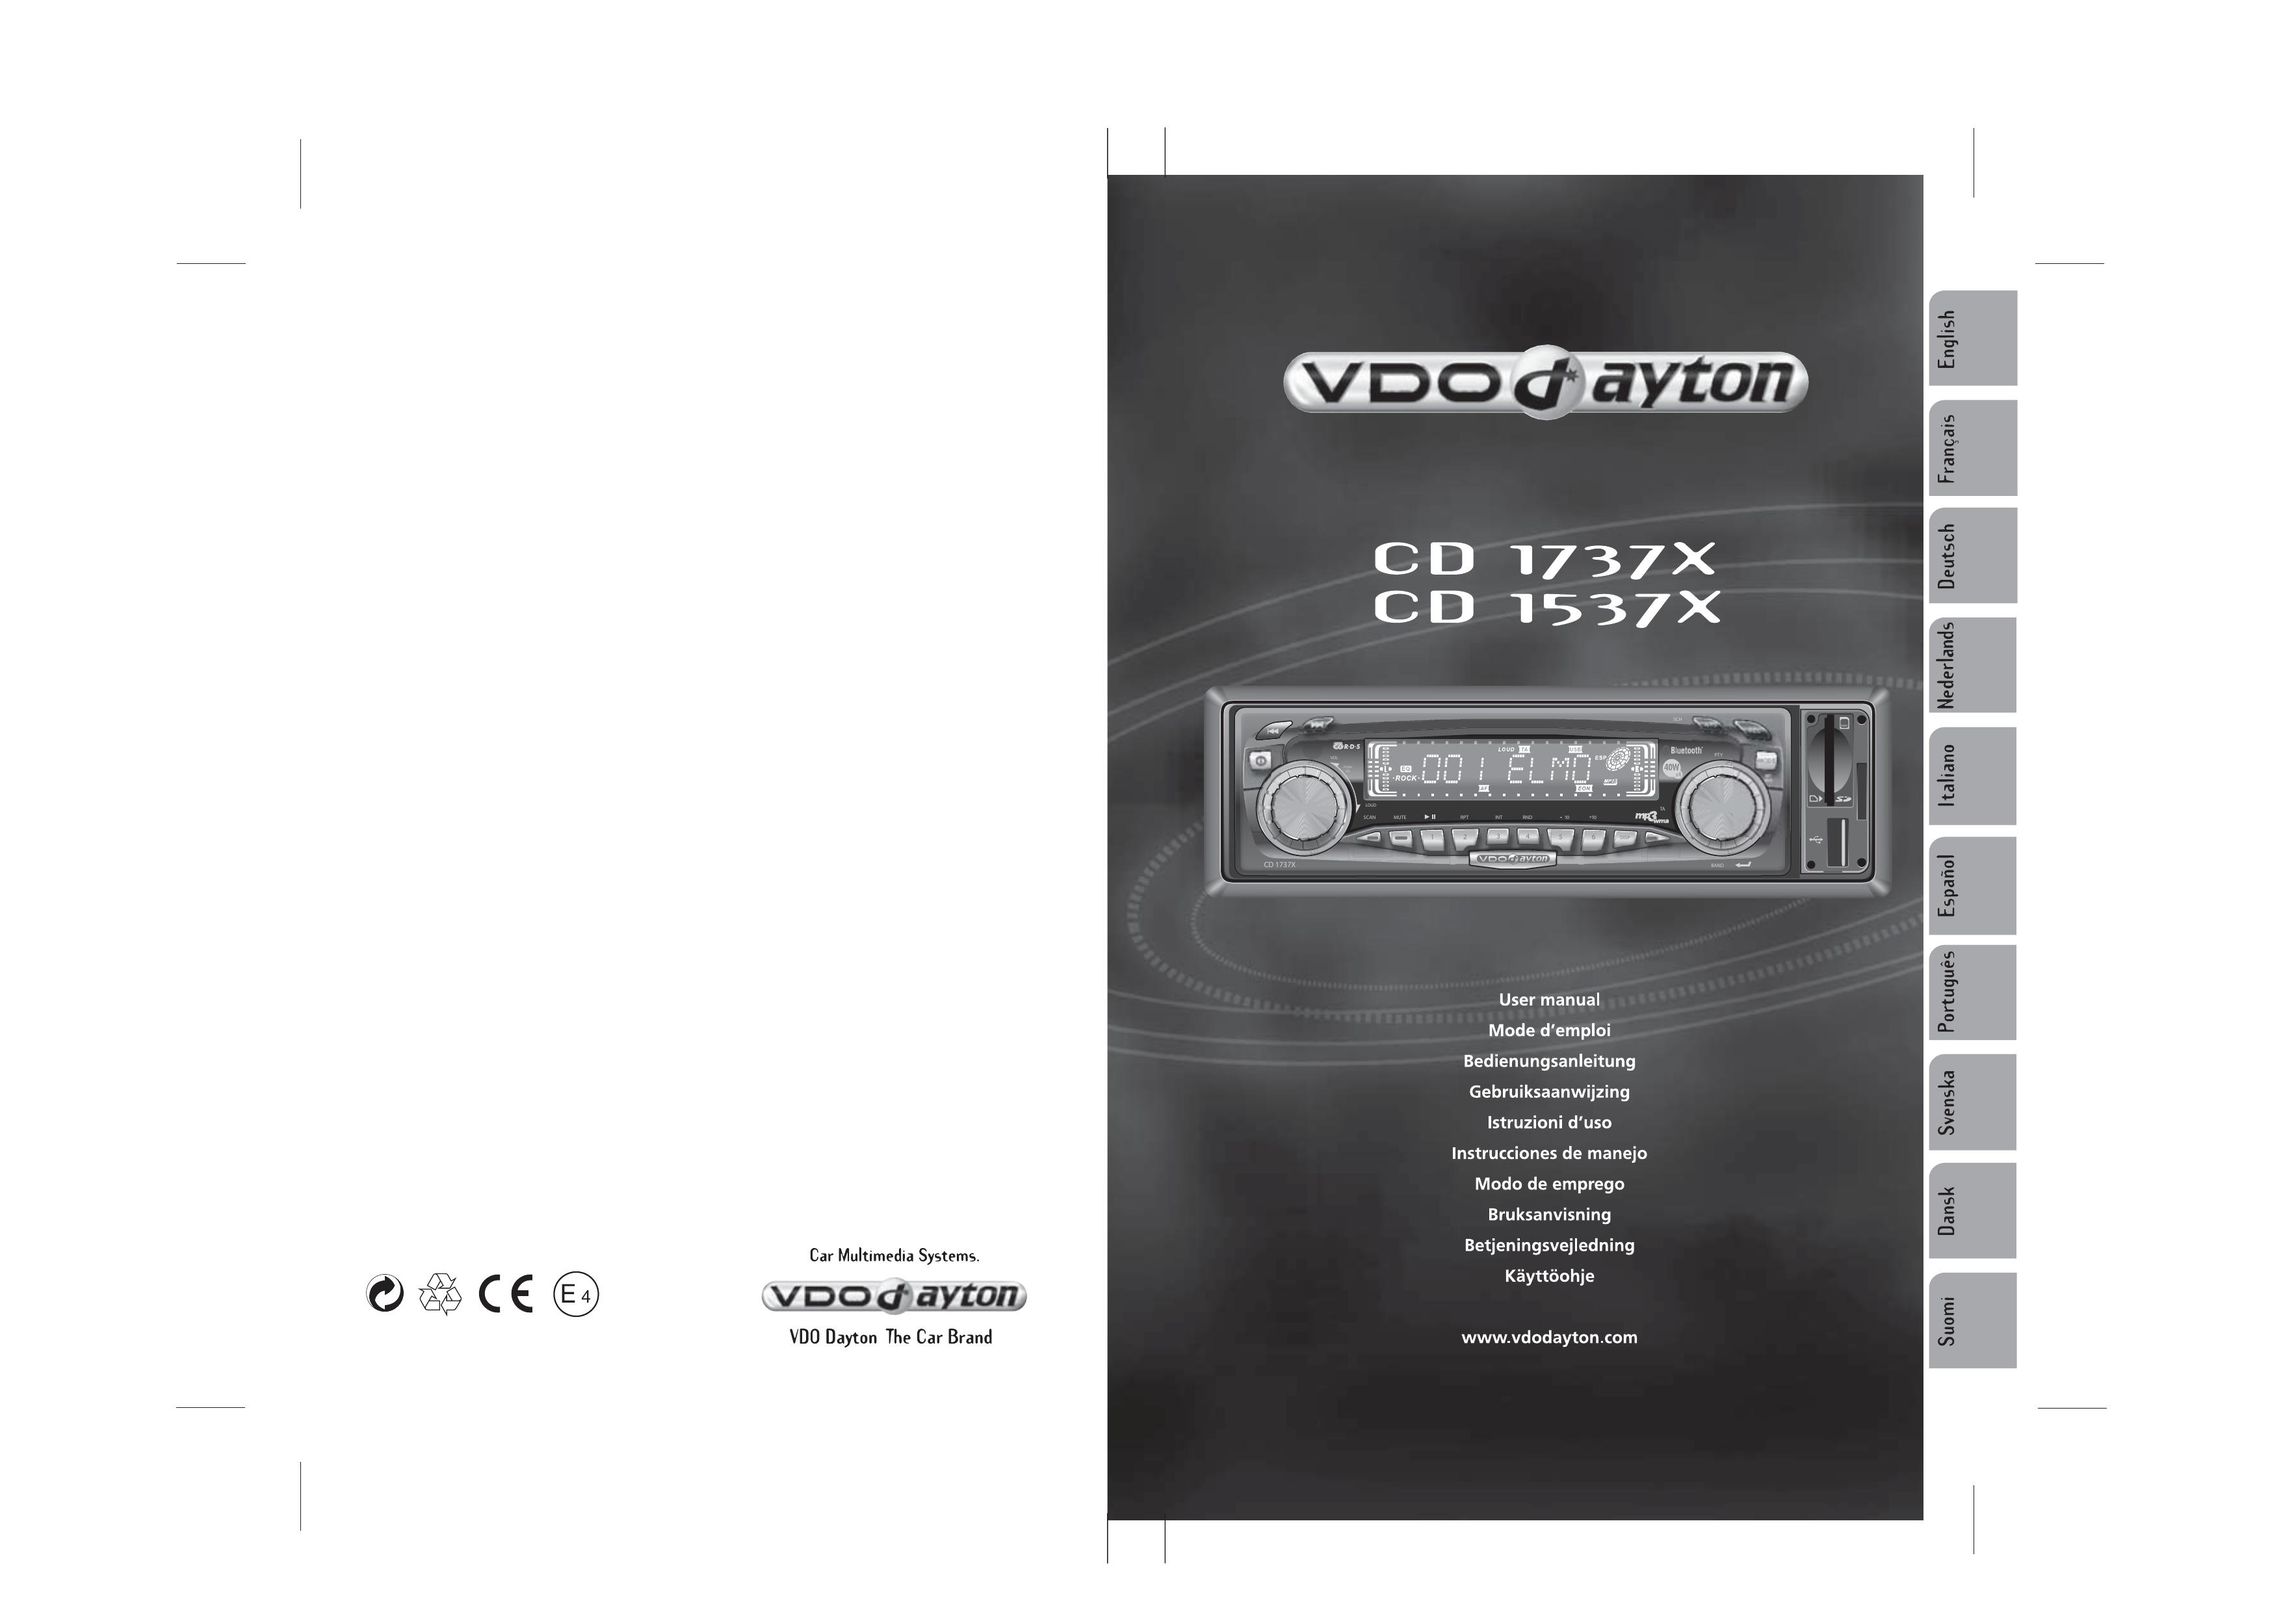 VDO Dayton CD1537x Car Stereo System User Manual